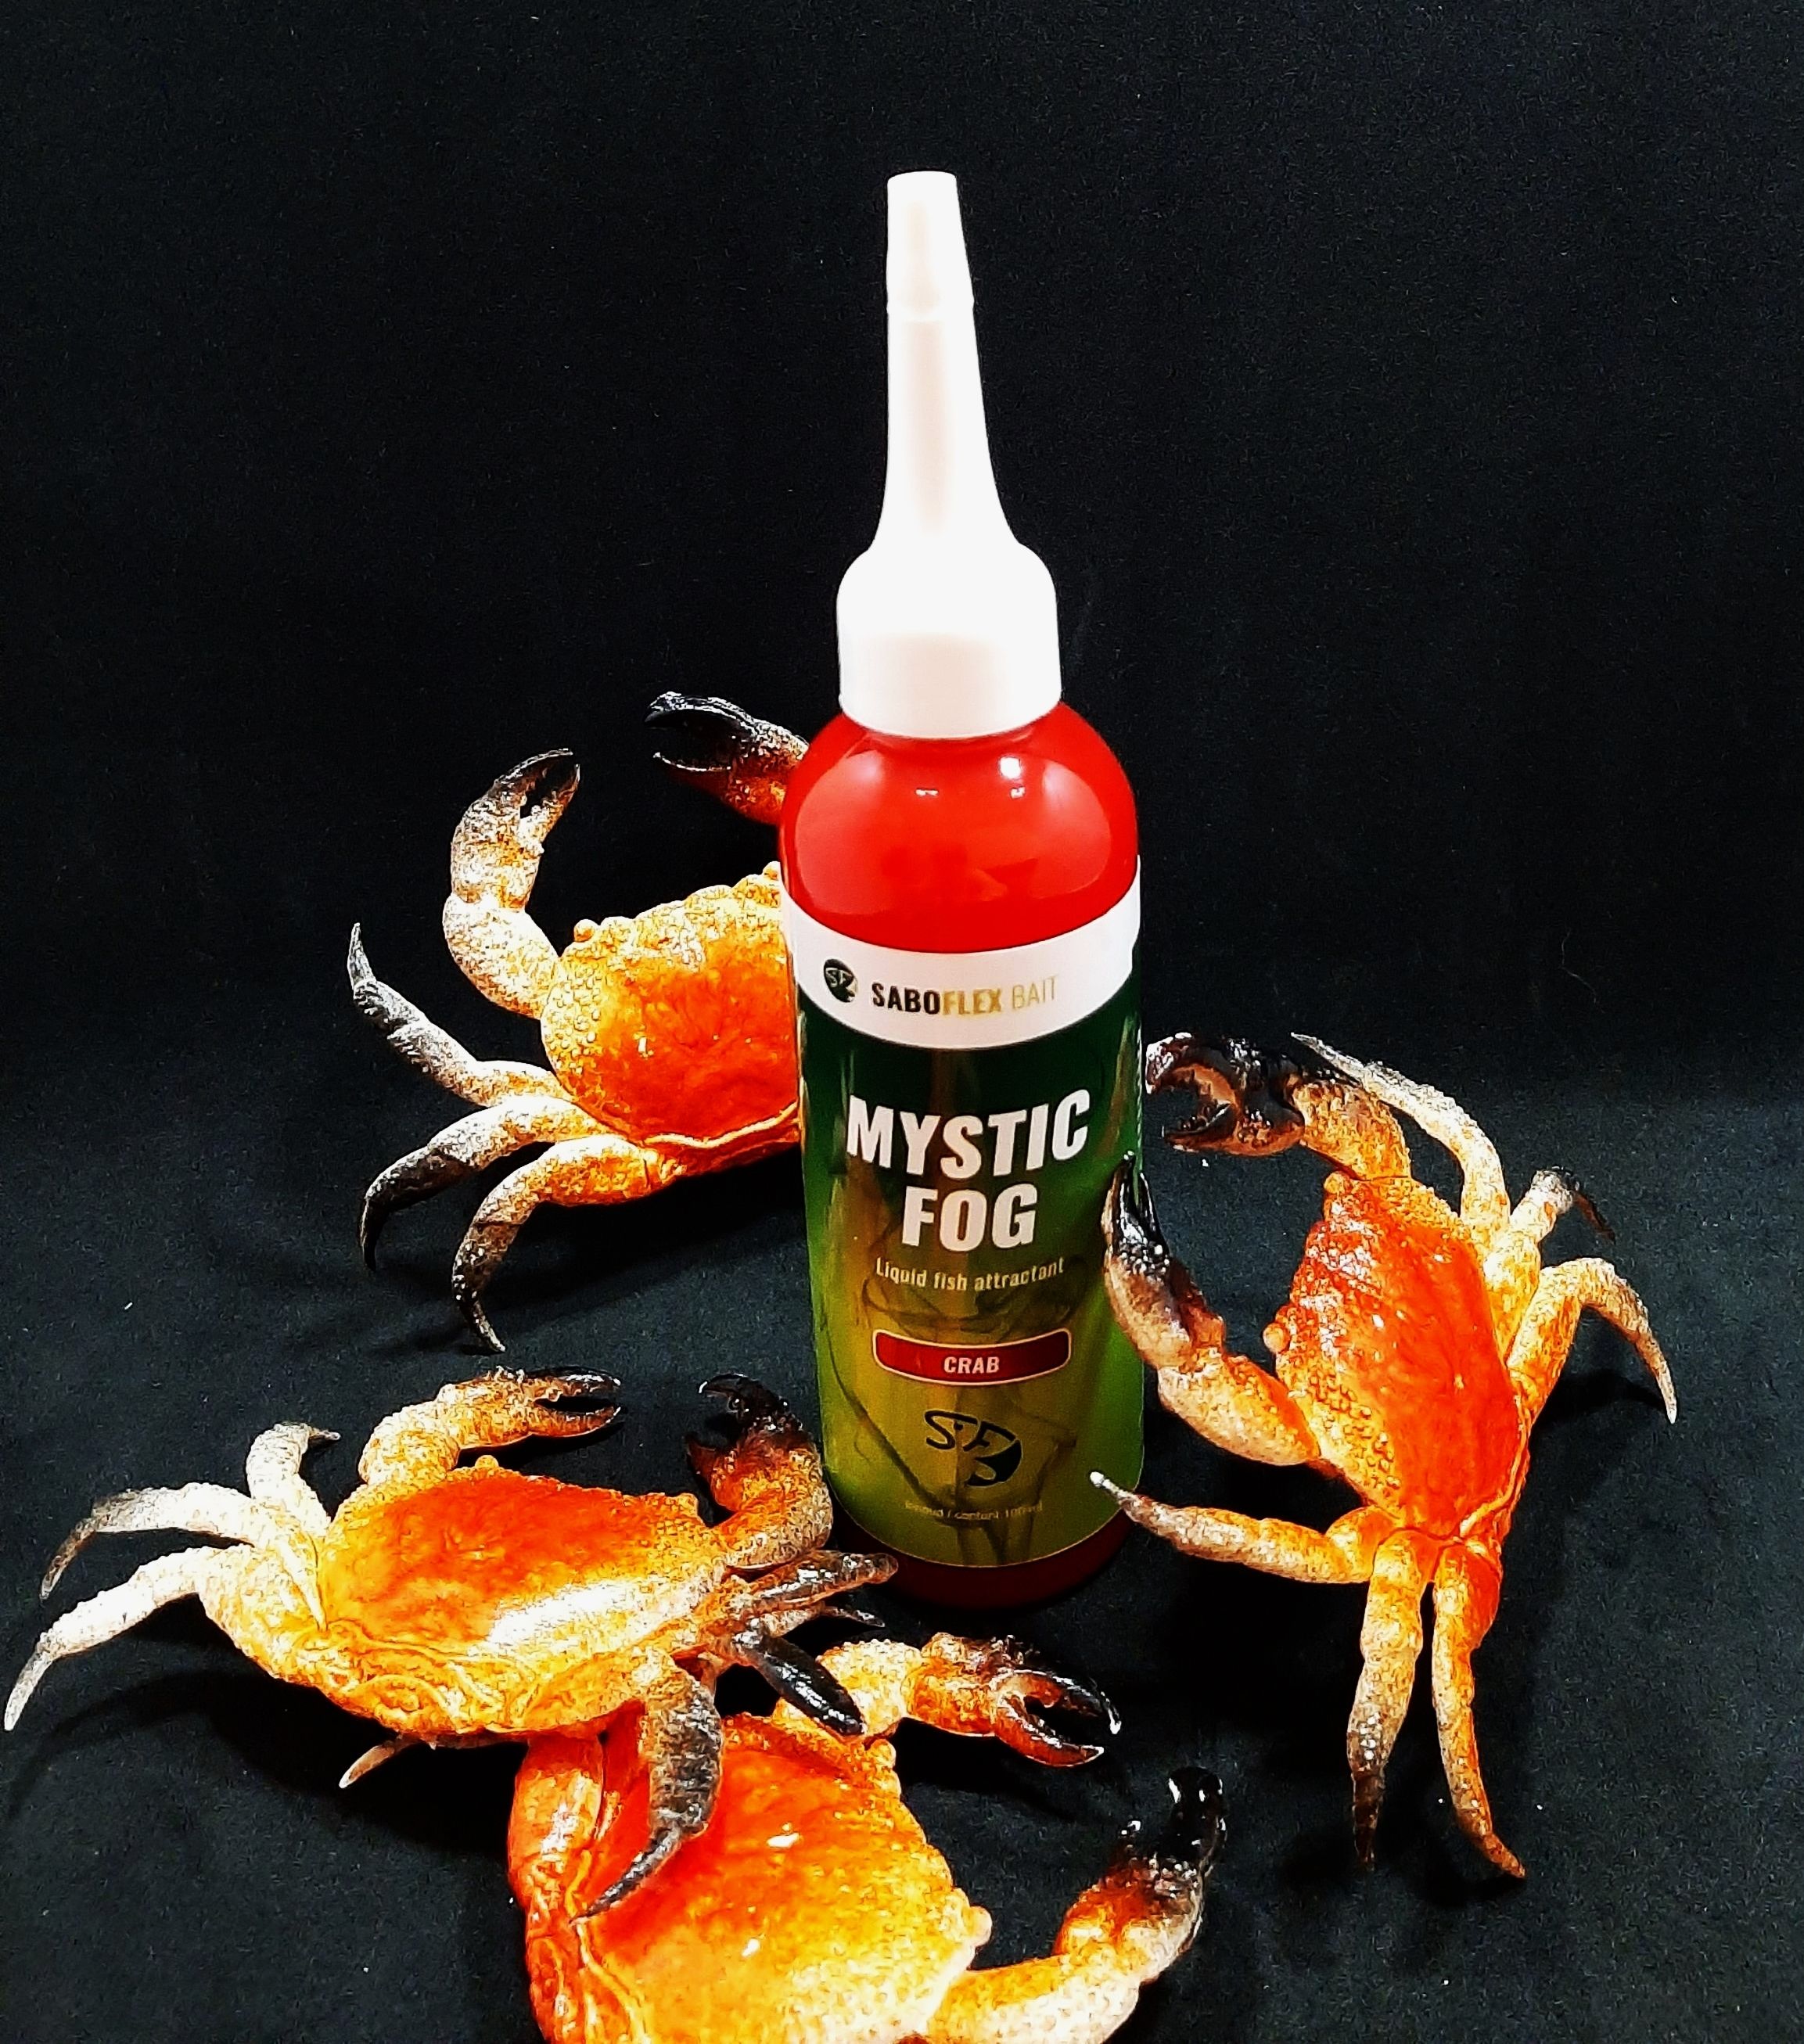 Saboflex Mystic Fog Atrayente Líquido para Peces - Crab